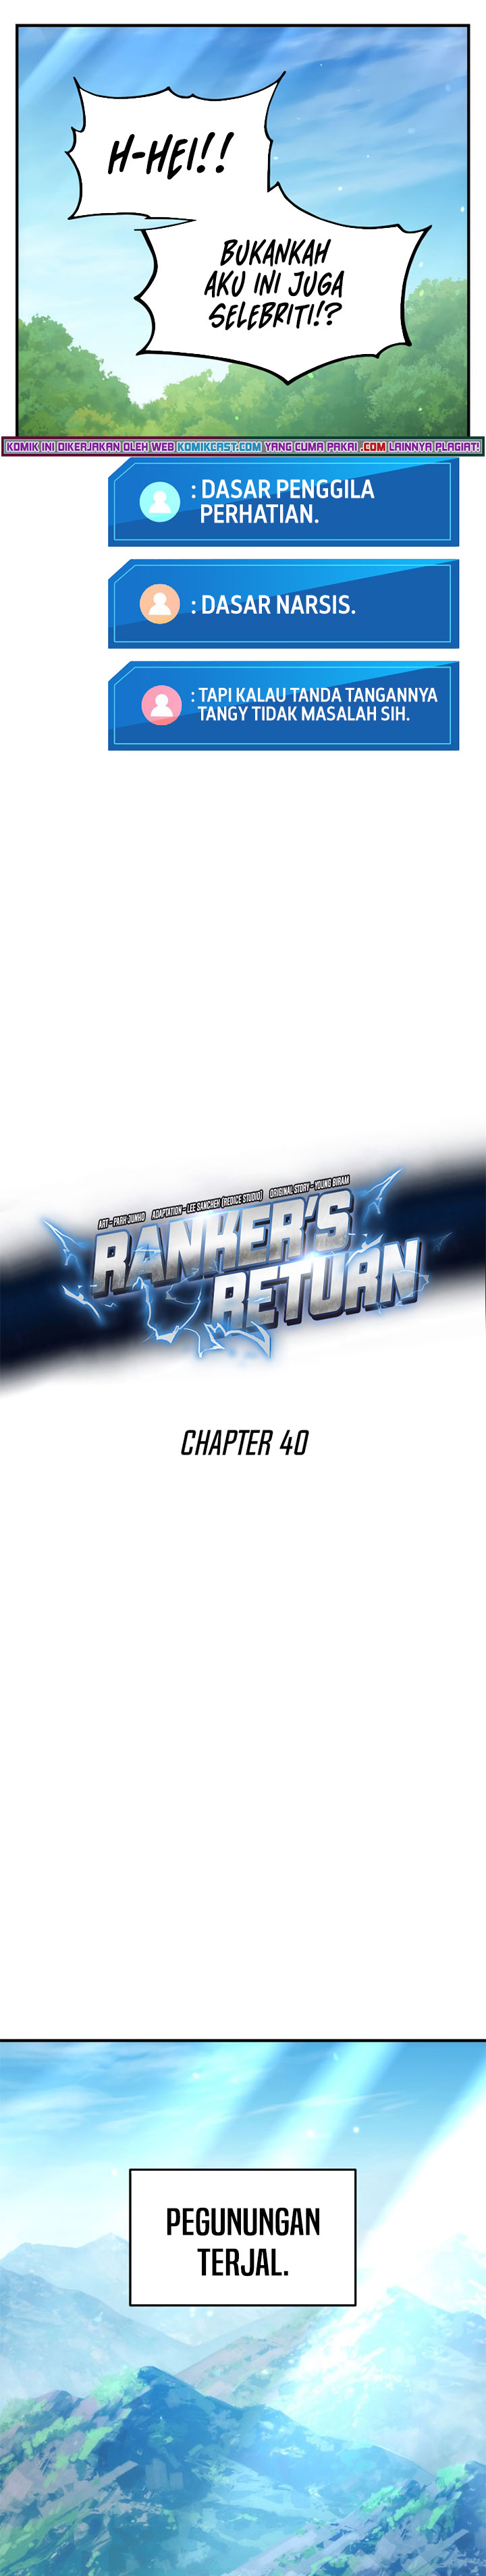 Ranker’s Return (Remake) Chapter 40